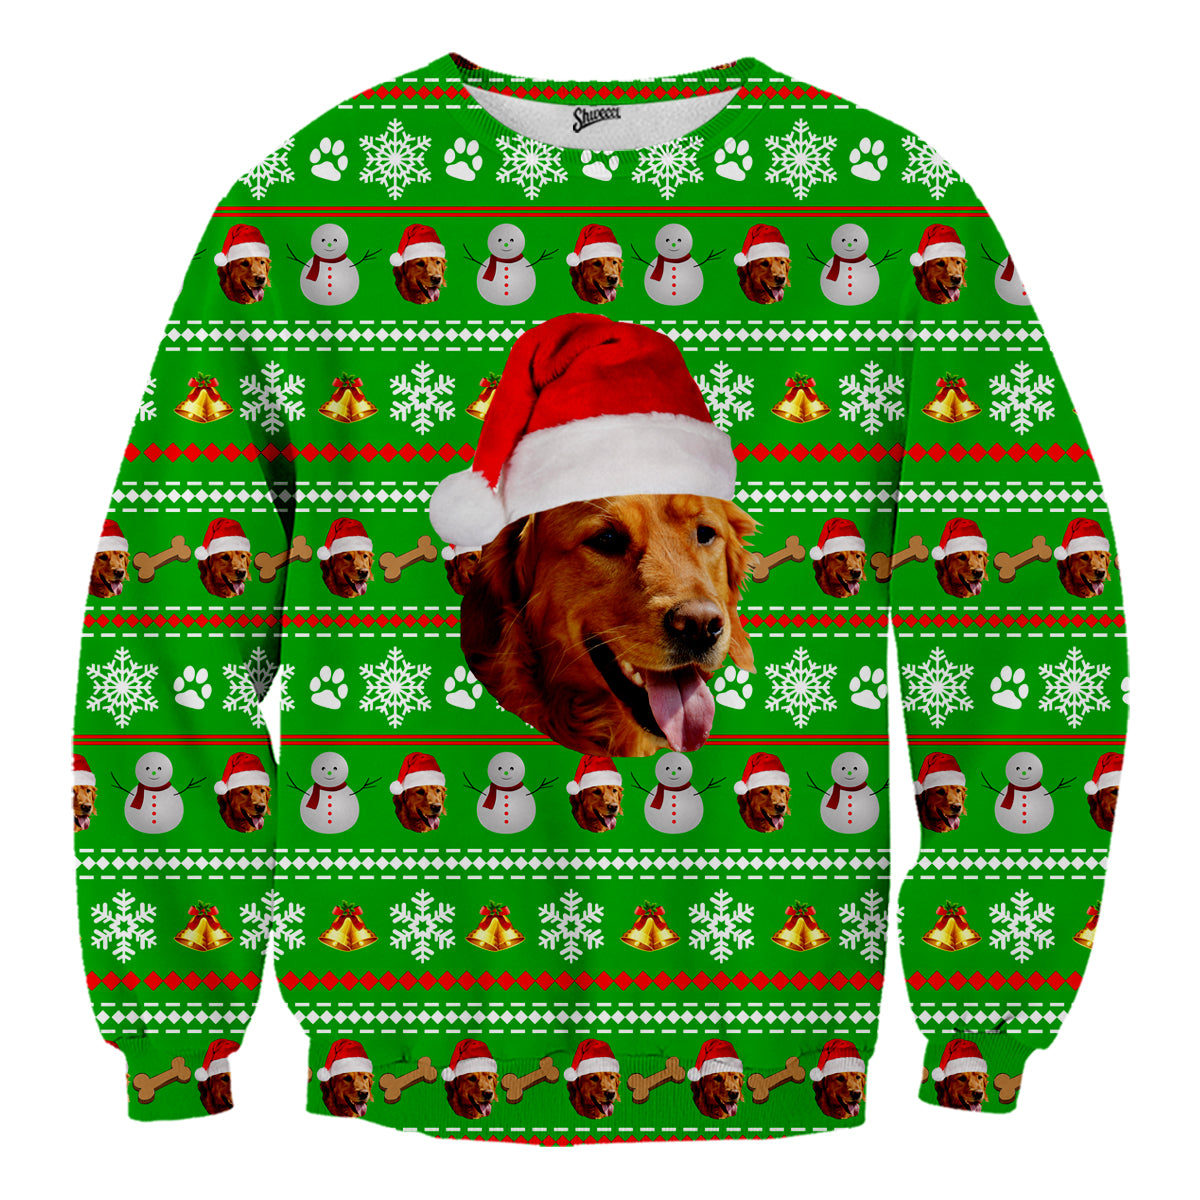 xl dog christmas sweater